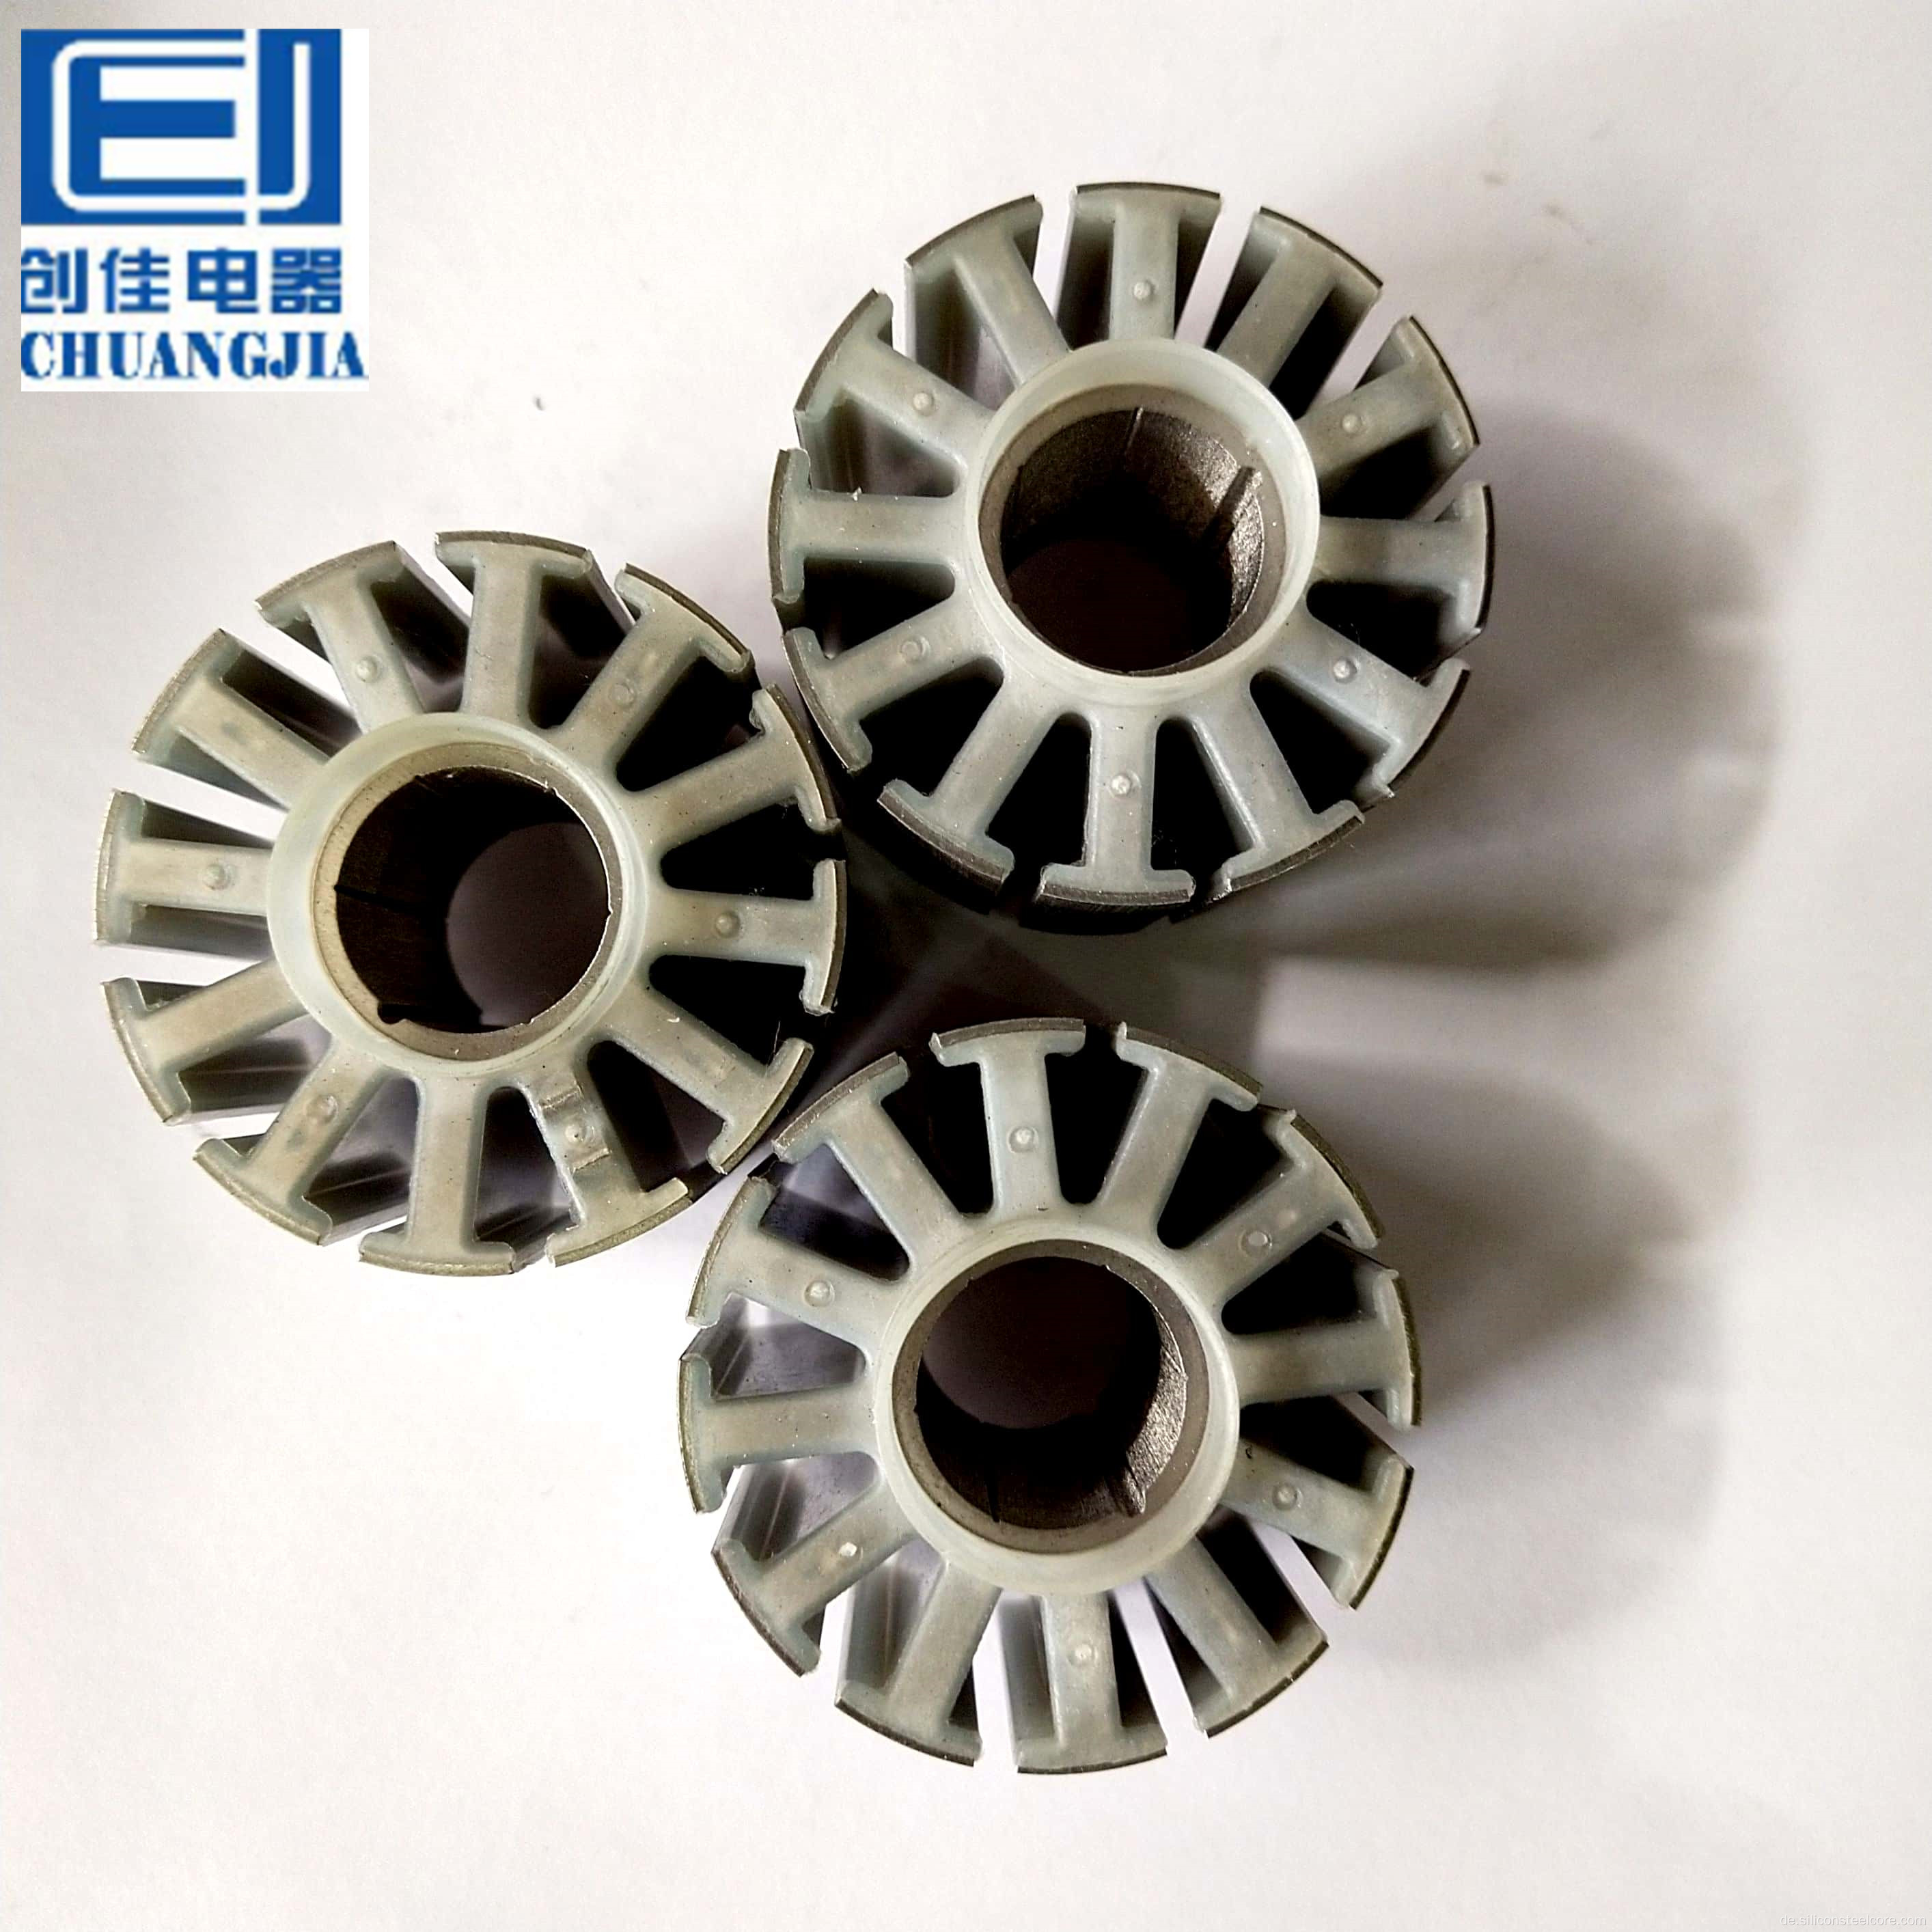 Chuangjia Wechselstrom -Motorstatator und Rotor Siliziumstahlblech 50 W 800 0,5 mm